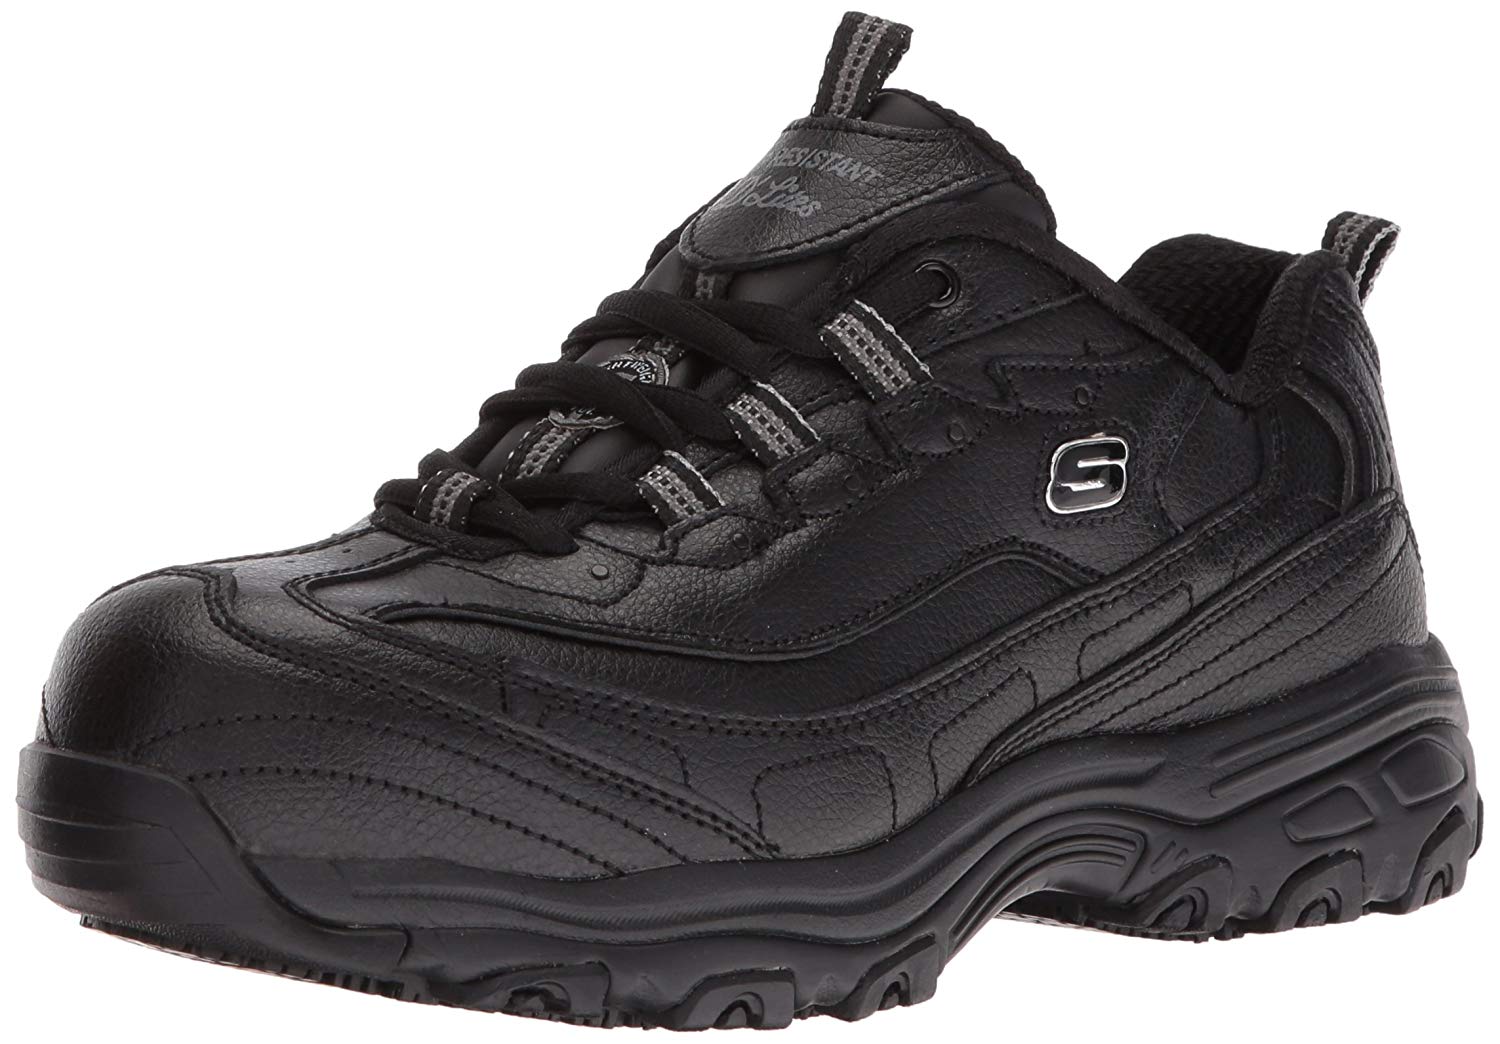 Skechers Womens d lites slip Low Top Lace Up Walking Shoes, Black, Size ...